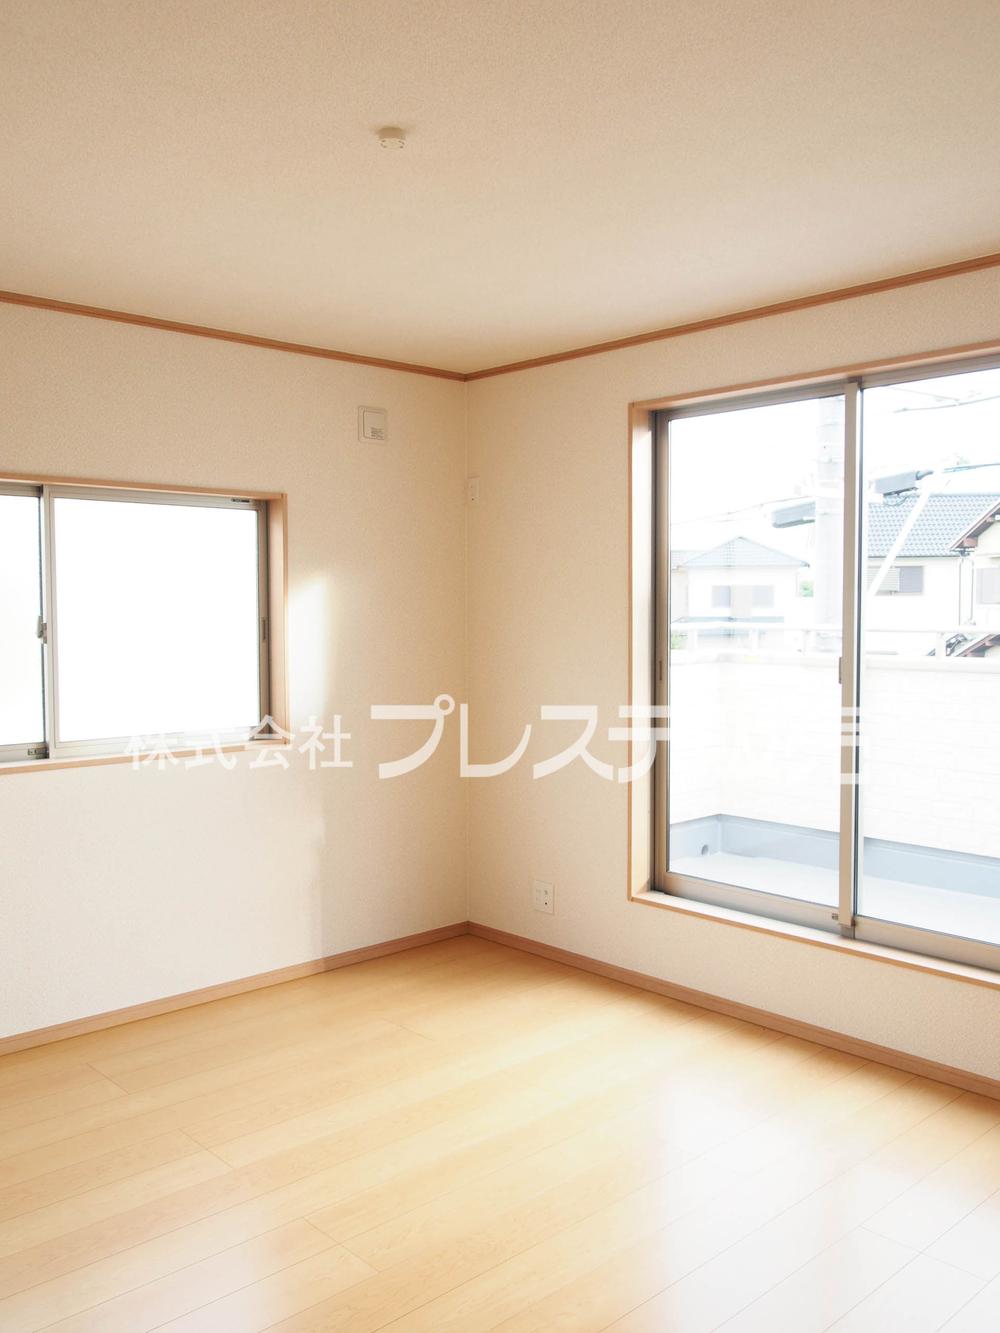 Non-living room. Local photo (No. 5 place 2 Kaikyoshitsu)